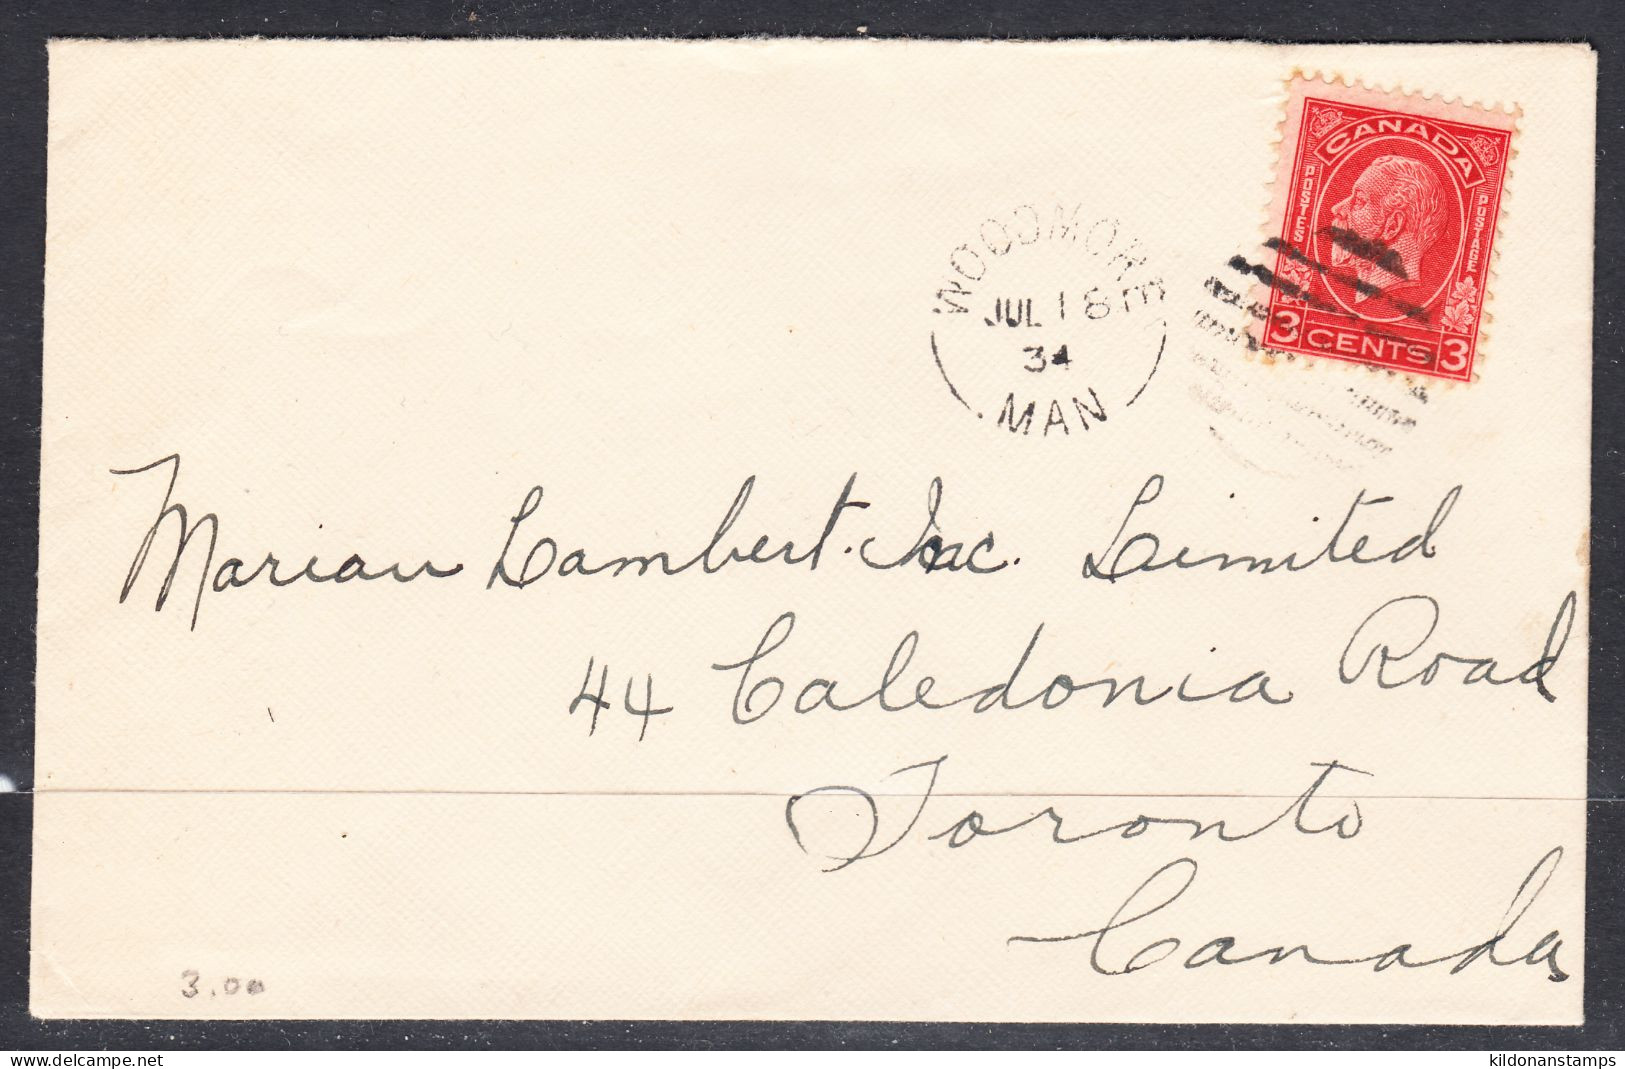 Canada Cover, Woodmore Manitoba, Jul 18 1934, A1 Broken Circle Postmark, To Marian Lambert Inc Ltd - Lettres & Documents